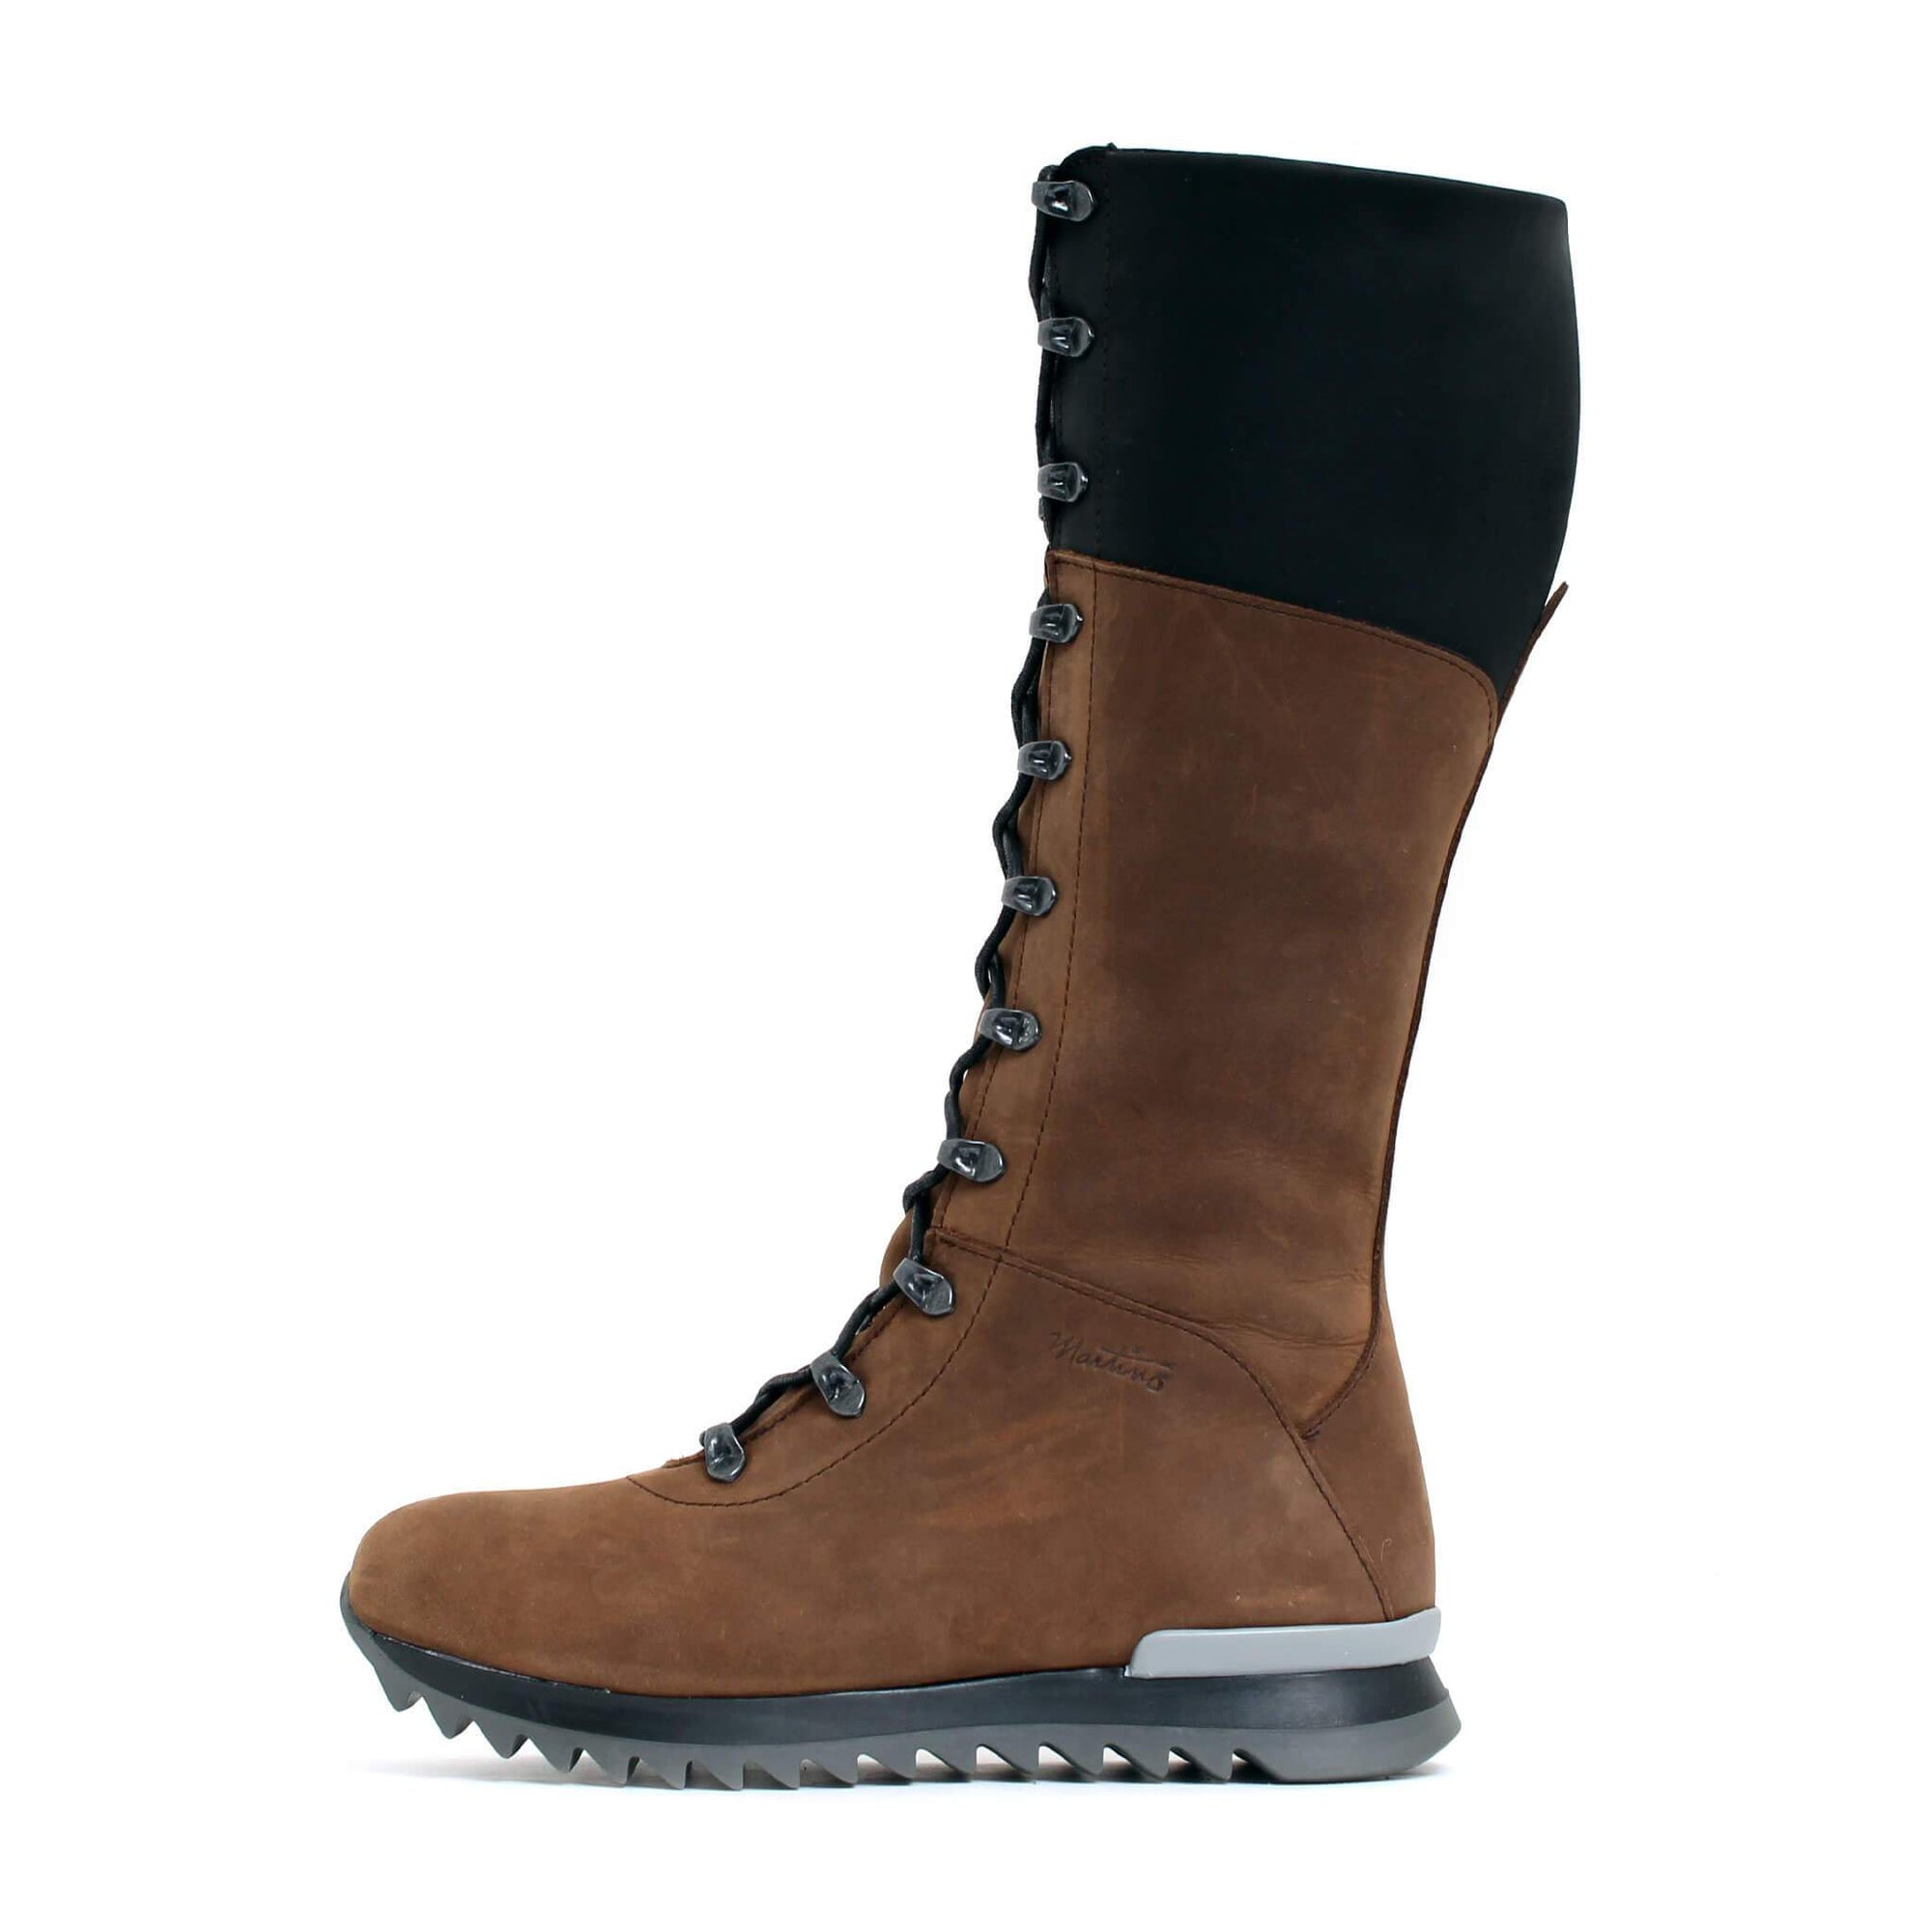 Peak winter boot for women - Brown-Black